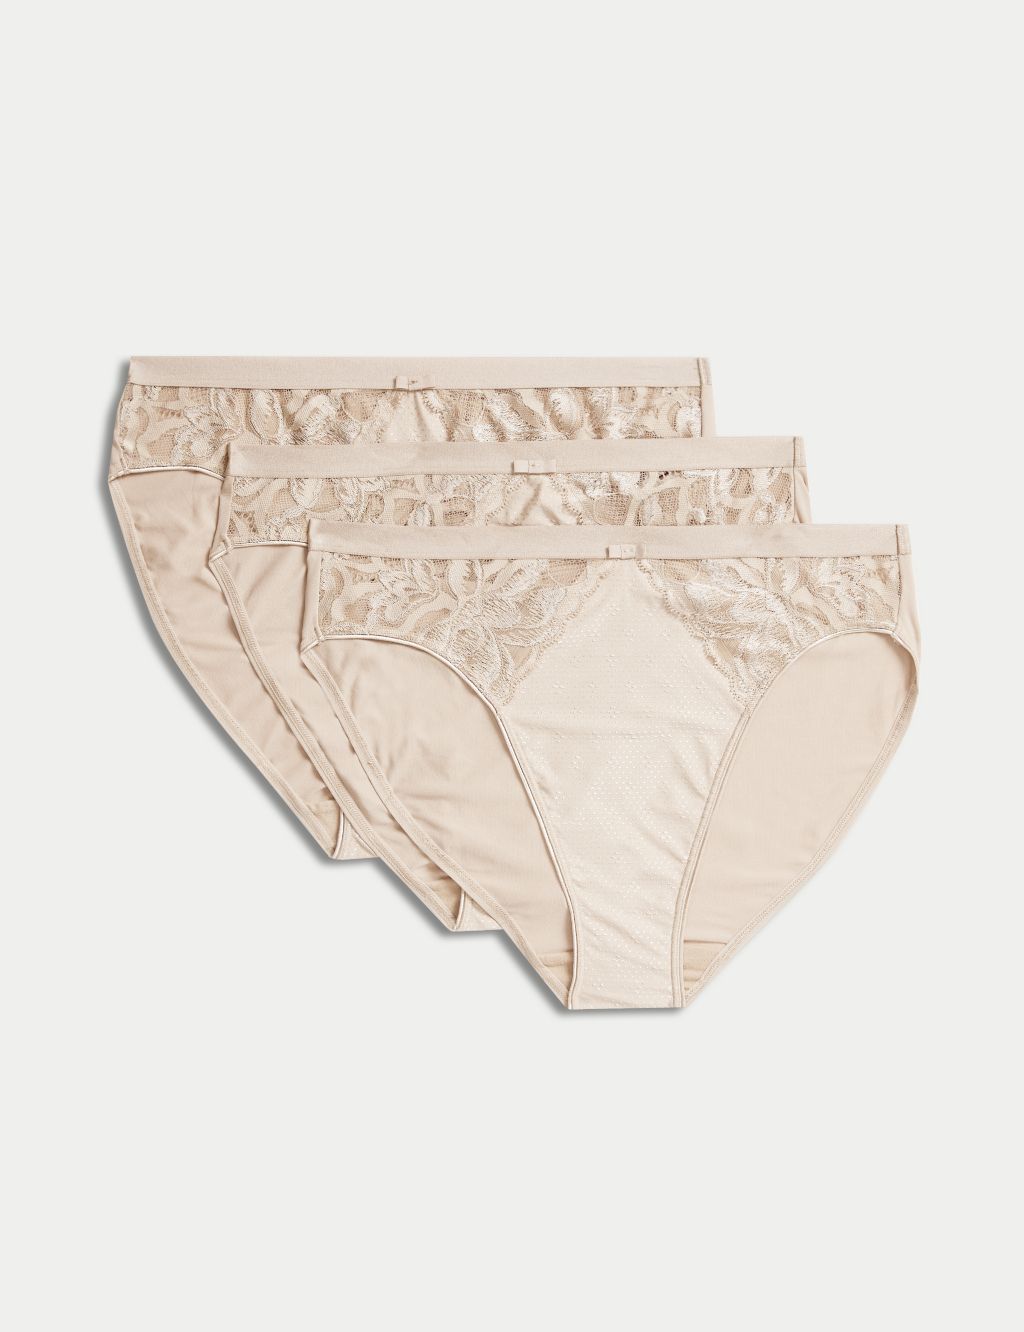 Hanes Women's 4pk Tummy Control Underwear - Colors May Vary S